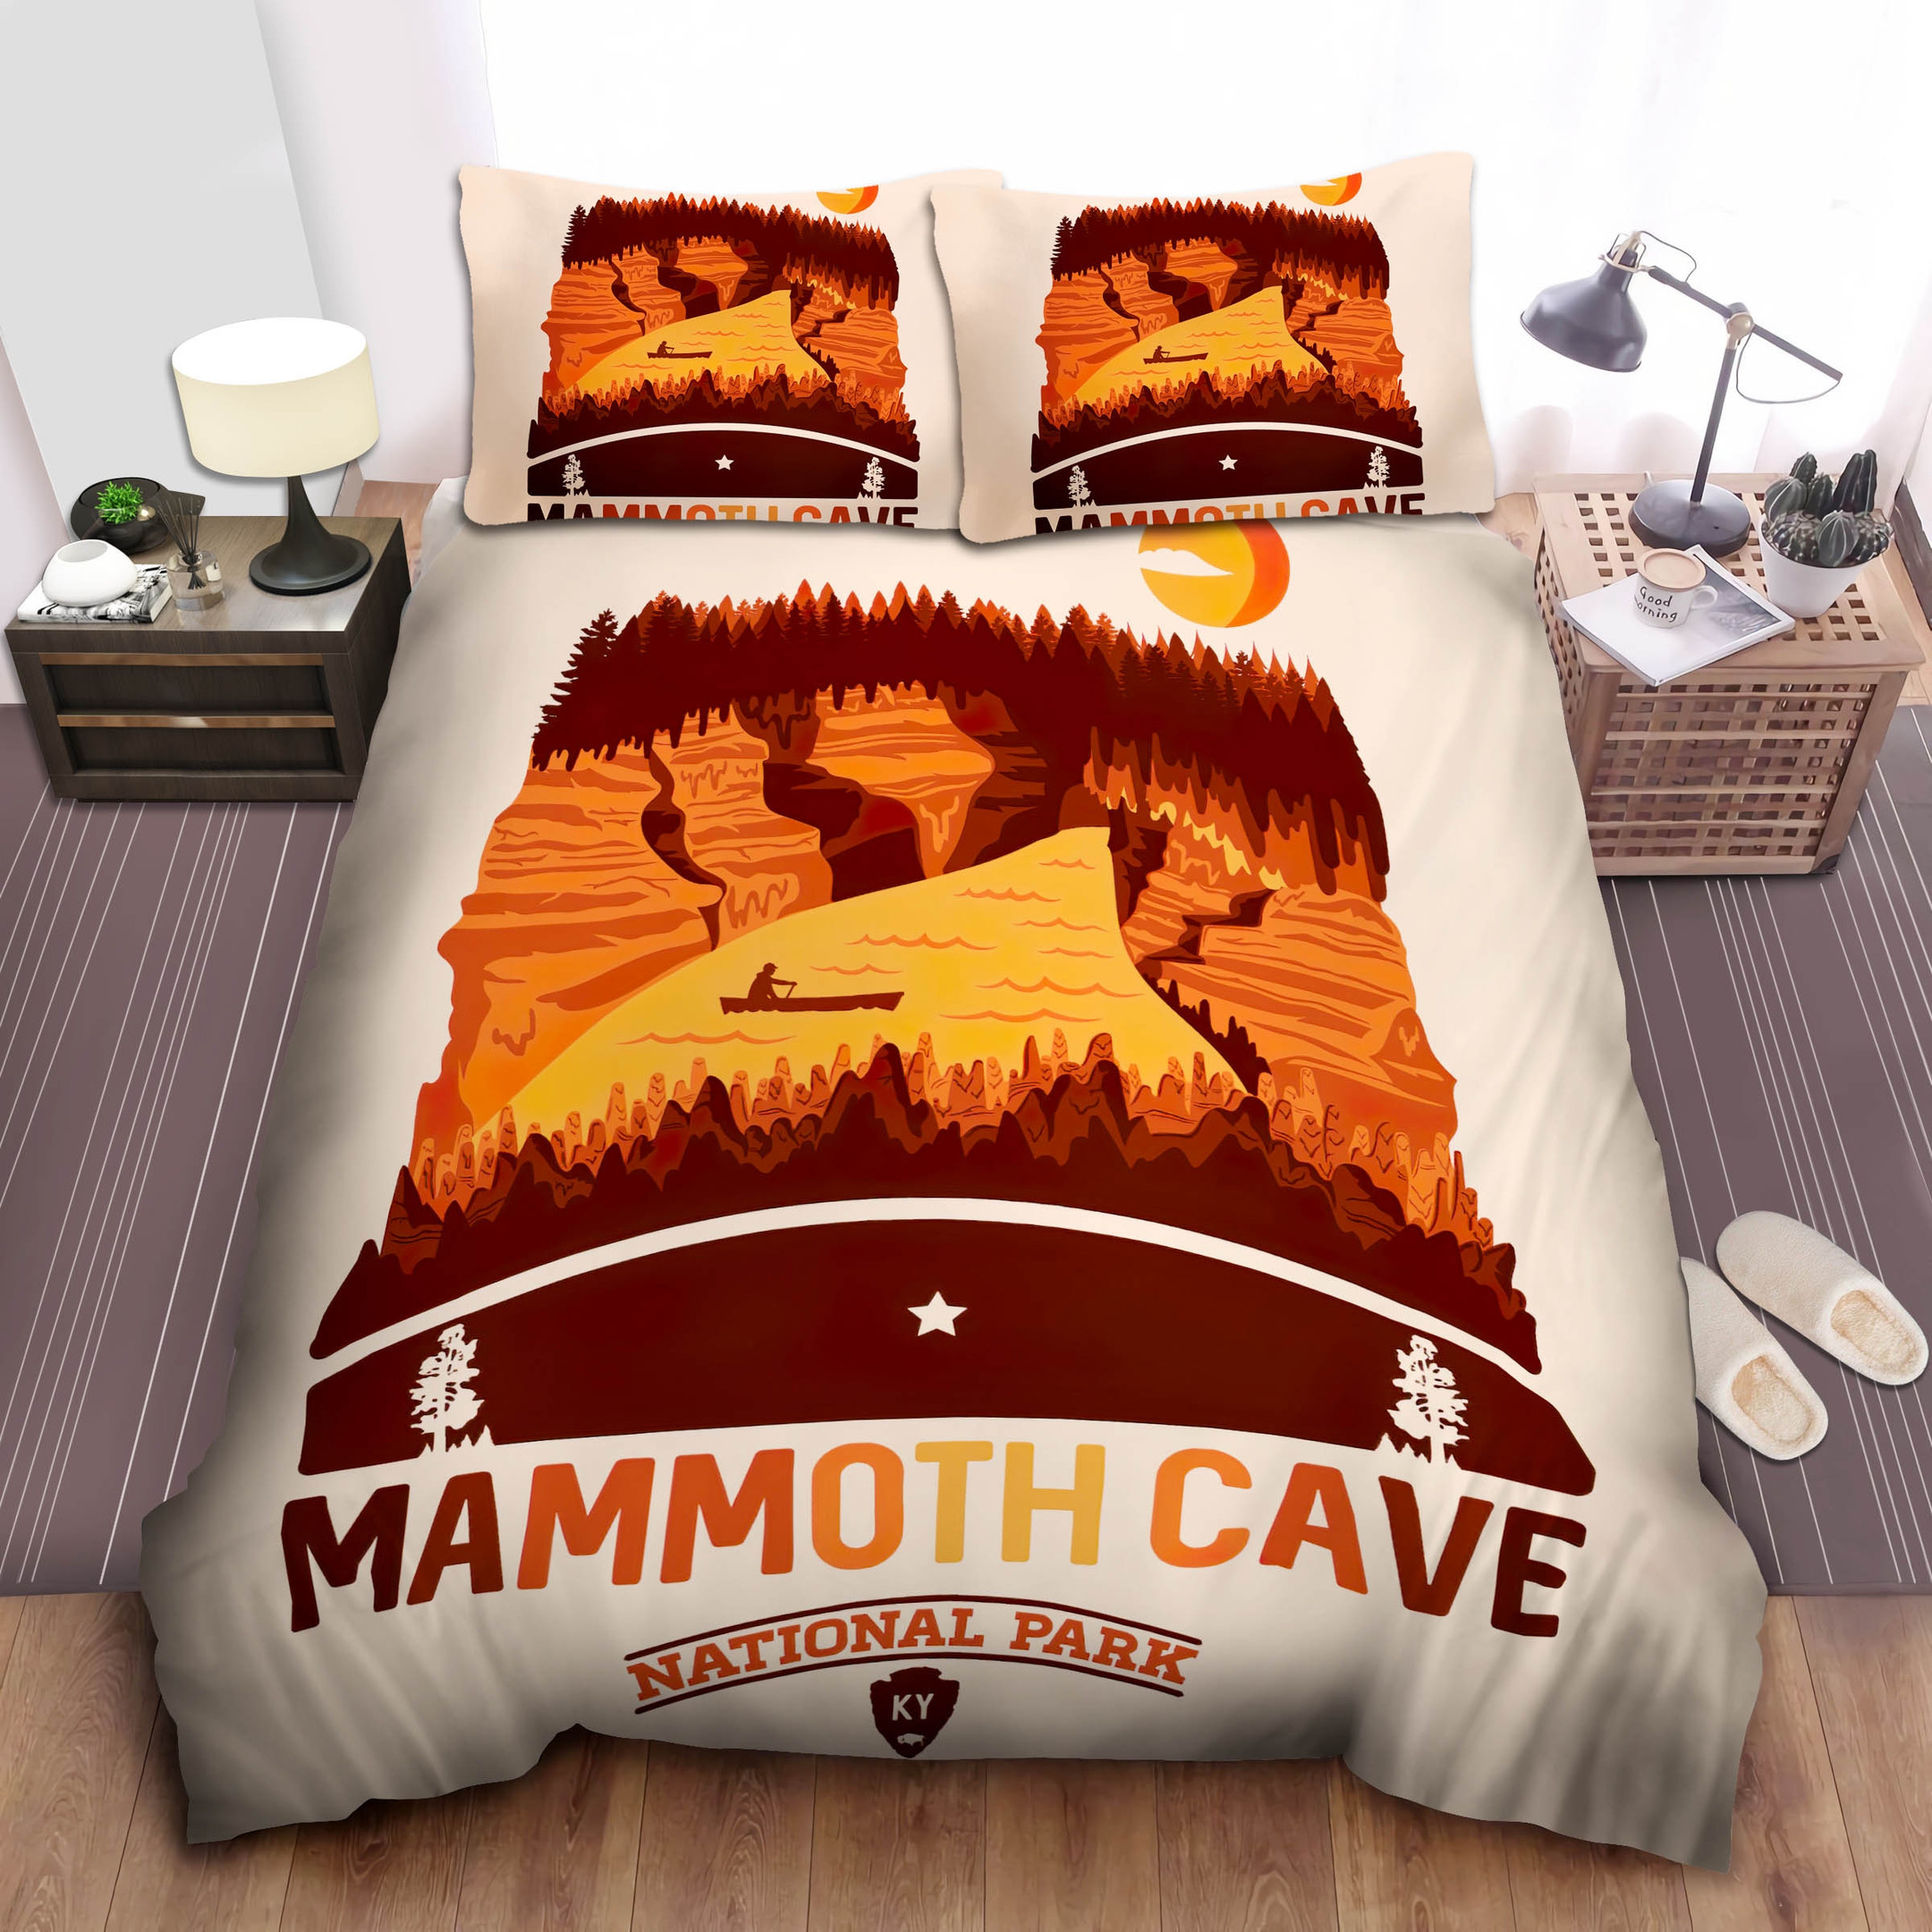 Kentucky Mammoth Cave National Park Illustration Bed Sheets Spread Comforter Duvet Cover Bedding Sets